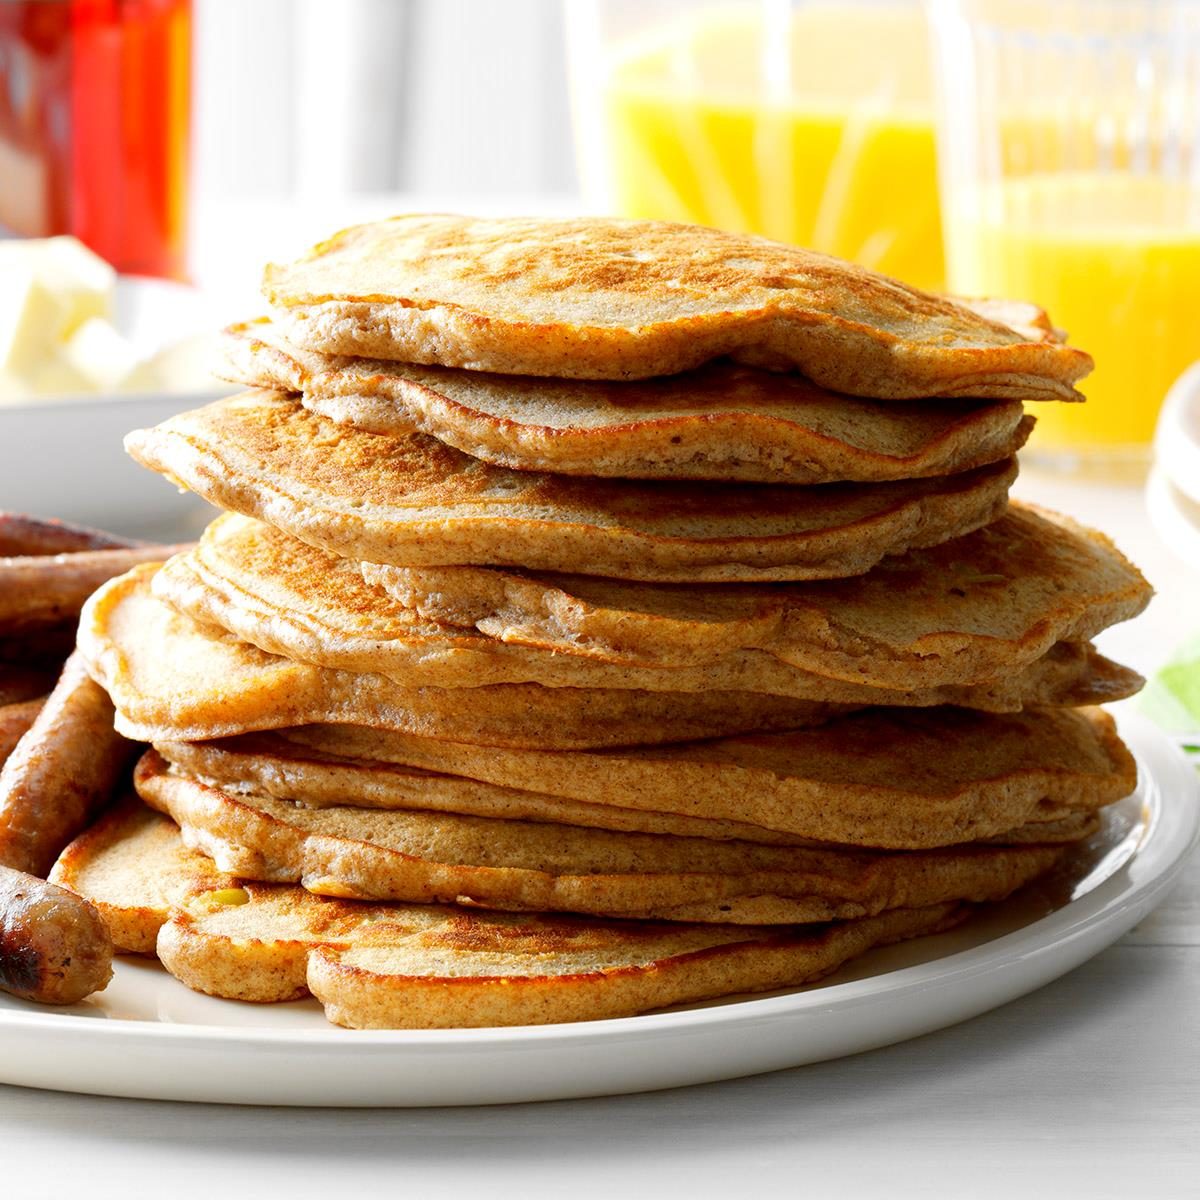 Day 6 Breakfast: Cinnamon Apple Pancakes